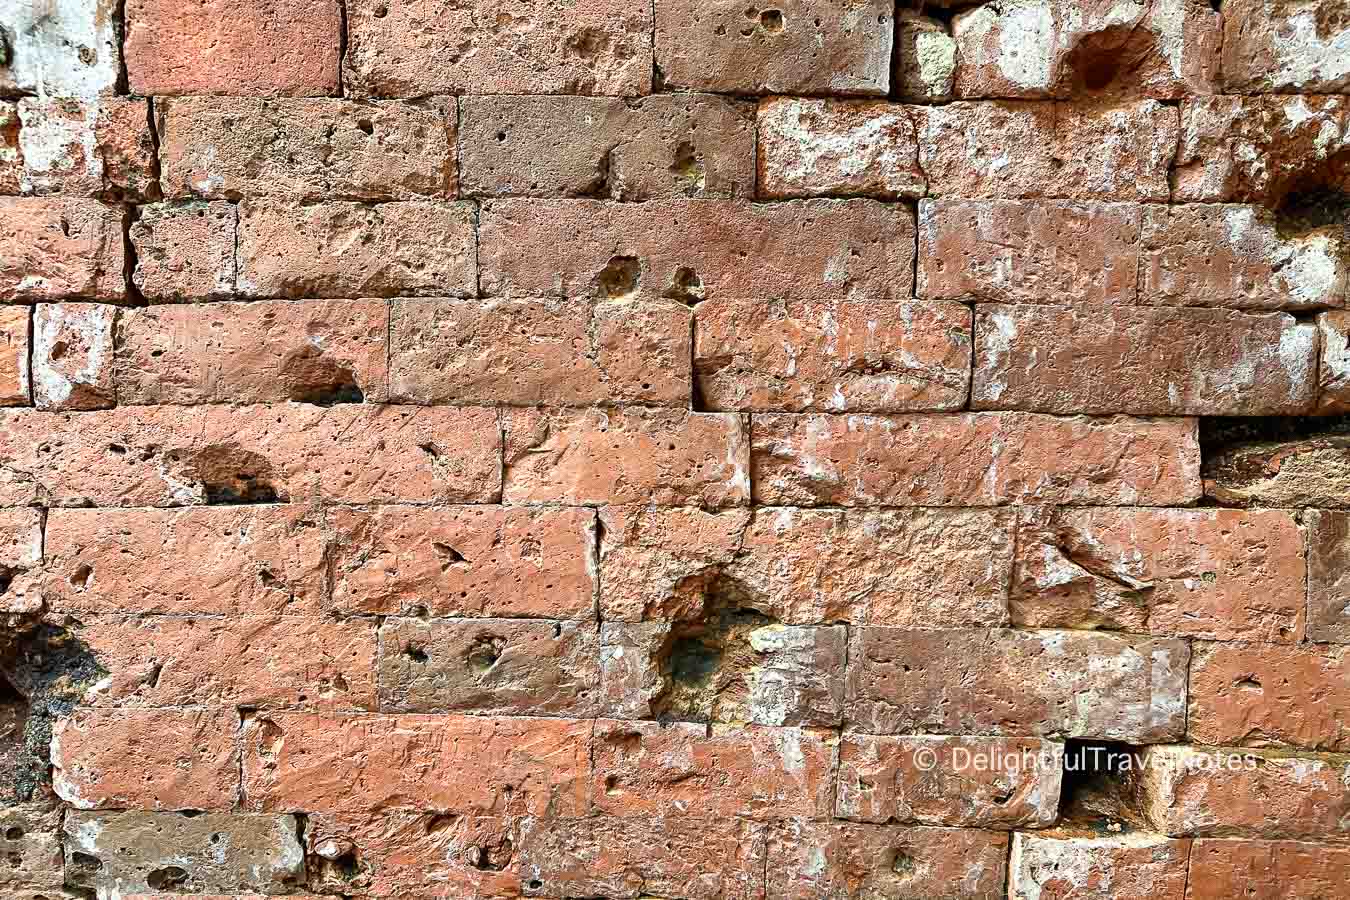 a wall with original ancient bricks at My Son Sanctuary.